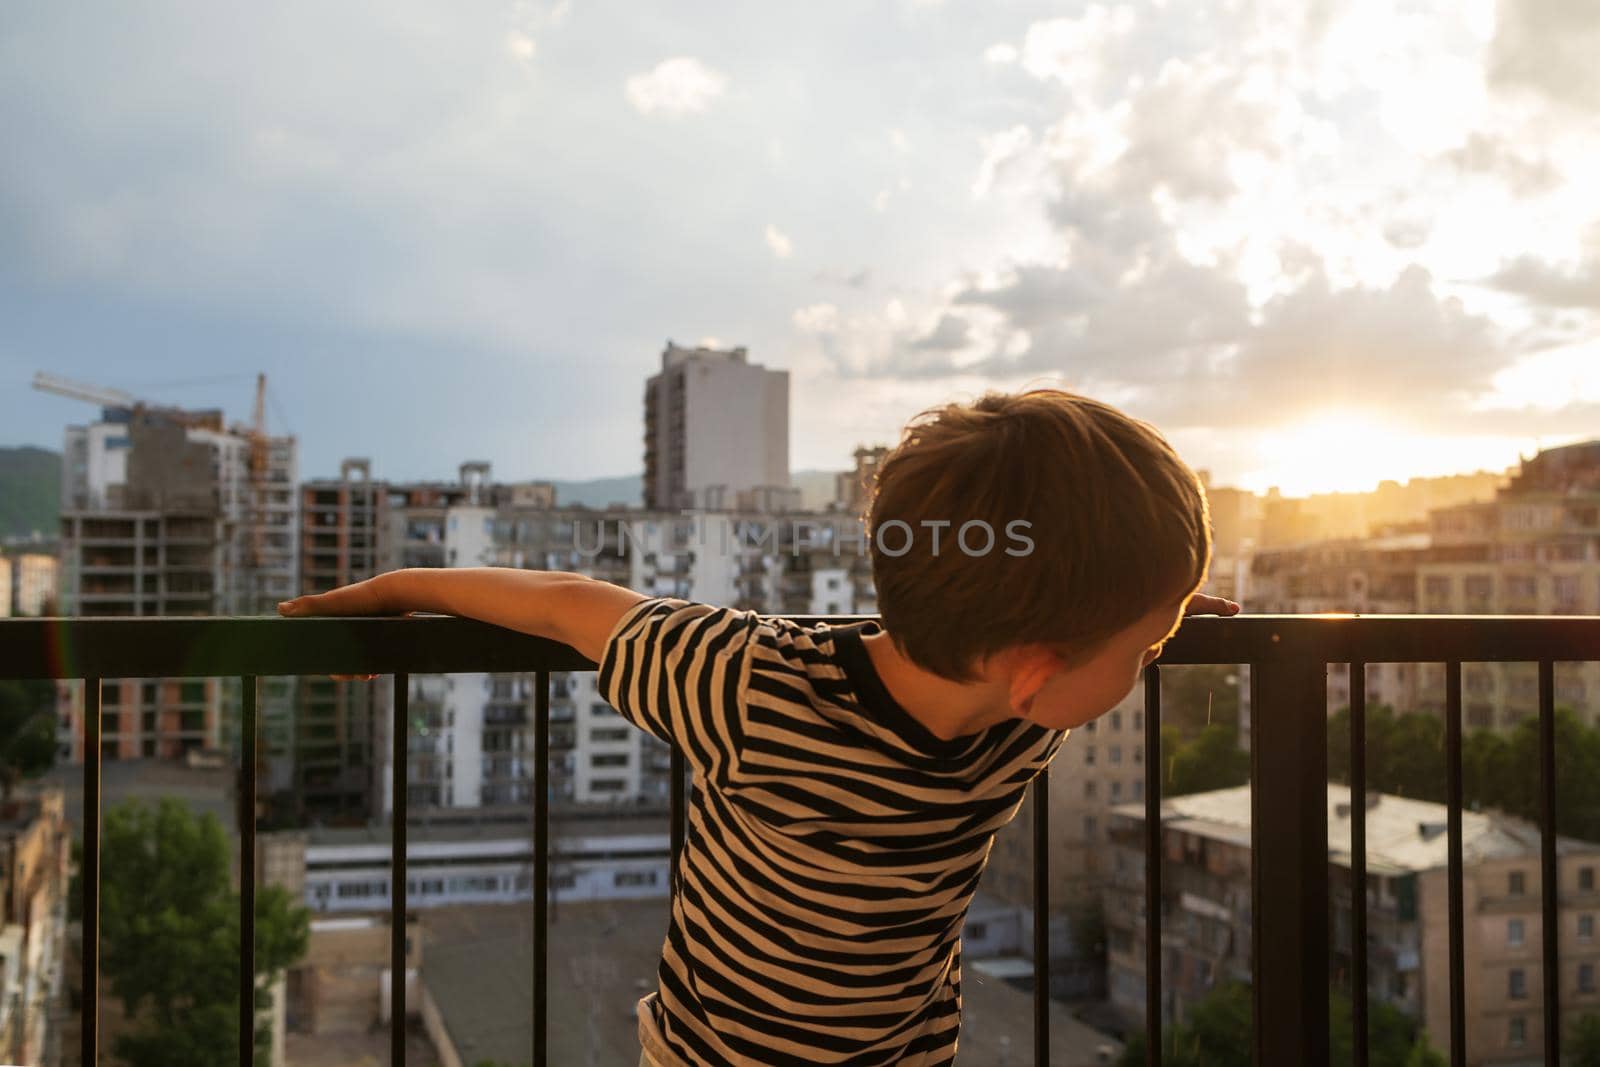 Unsupervised toddler climbing dangerous balcony railing Risky child behavior by Ramanouskaya